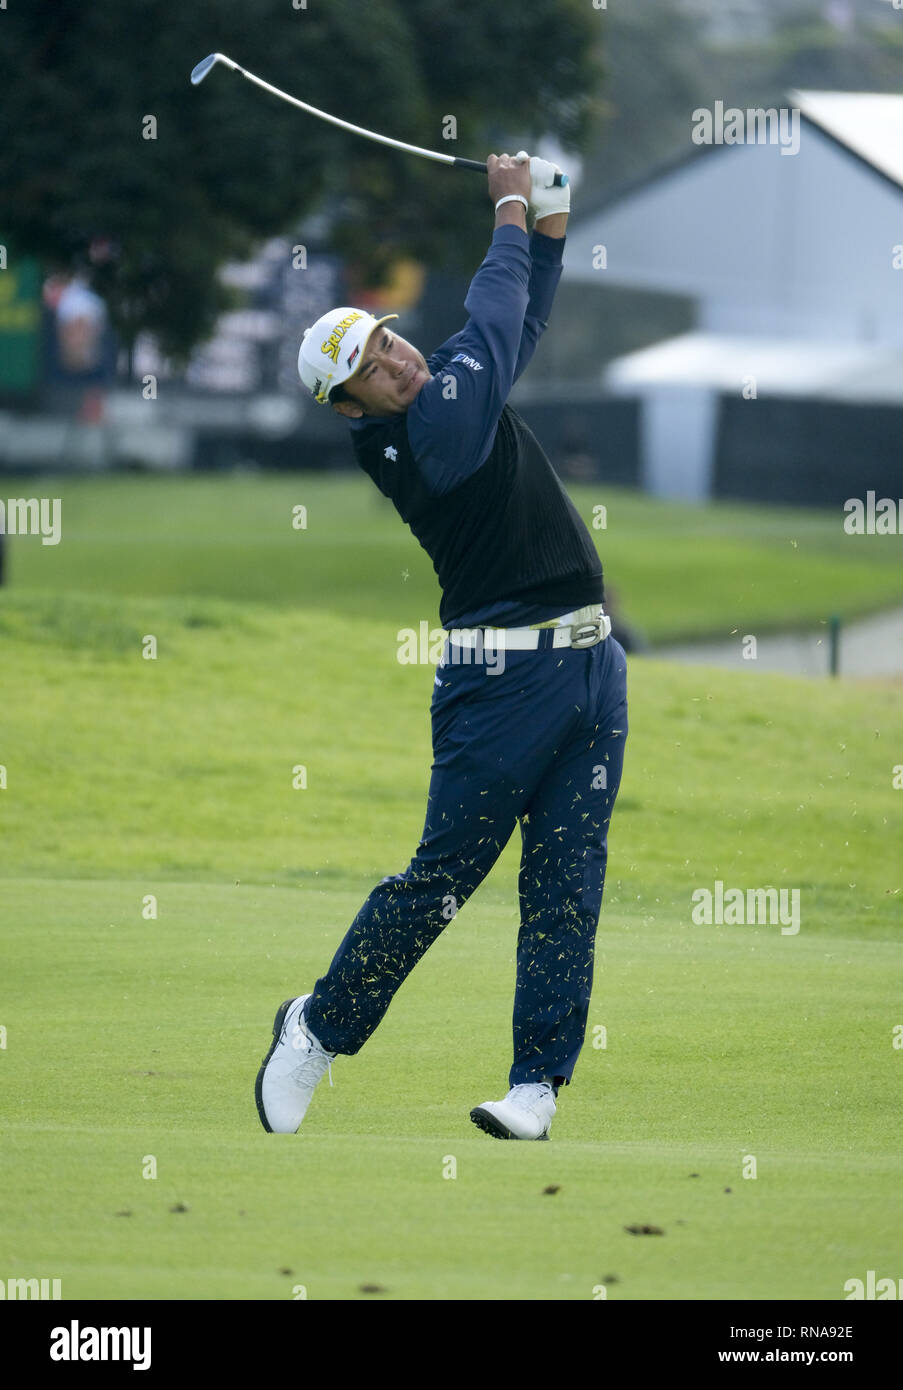 Los Angeles, California, EEUU. 17 Feb, 2019. Hideki Matsuyama compite en la ronda final del PGA Tour Génesis Open Golf Tournament en Riviera Country Club el 17 de febrero de 2019 en Pacific Palisades, California. Crédito: Ringo Chiu/Zuma alambre/Alamy Live News Foto de stock